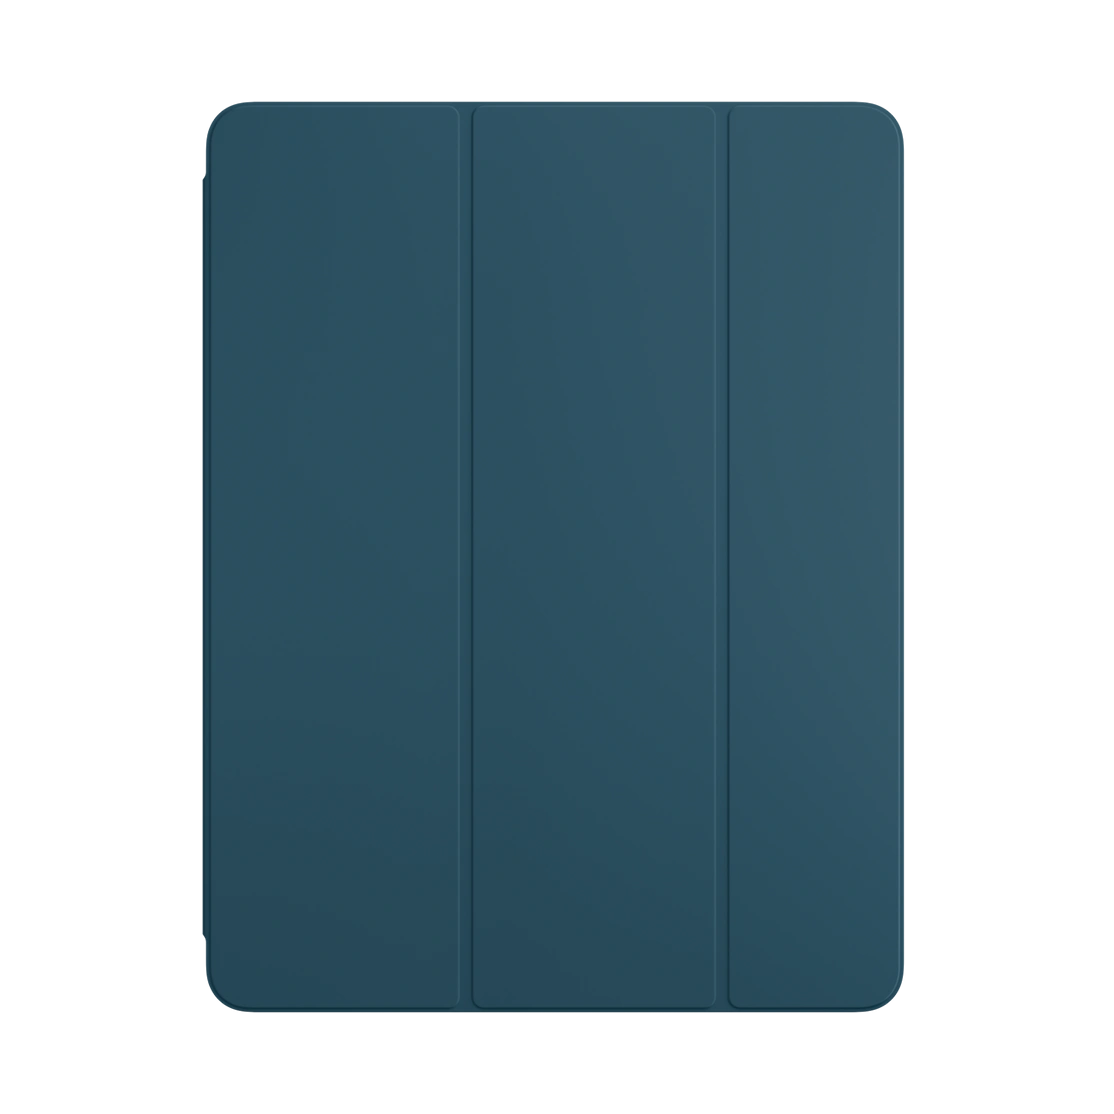 HC Smart Folio for iPad Pro 12.9-inch